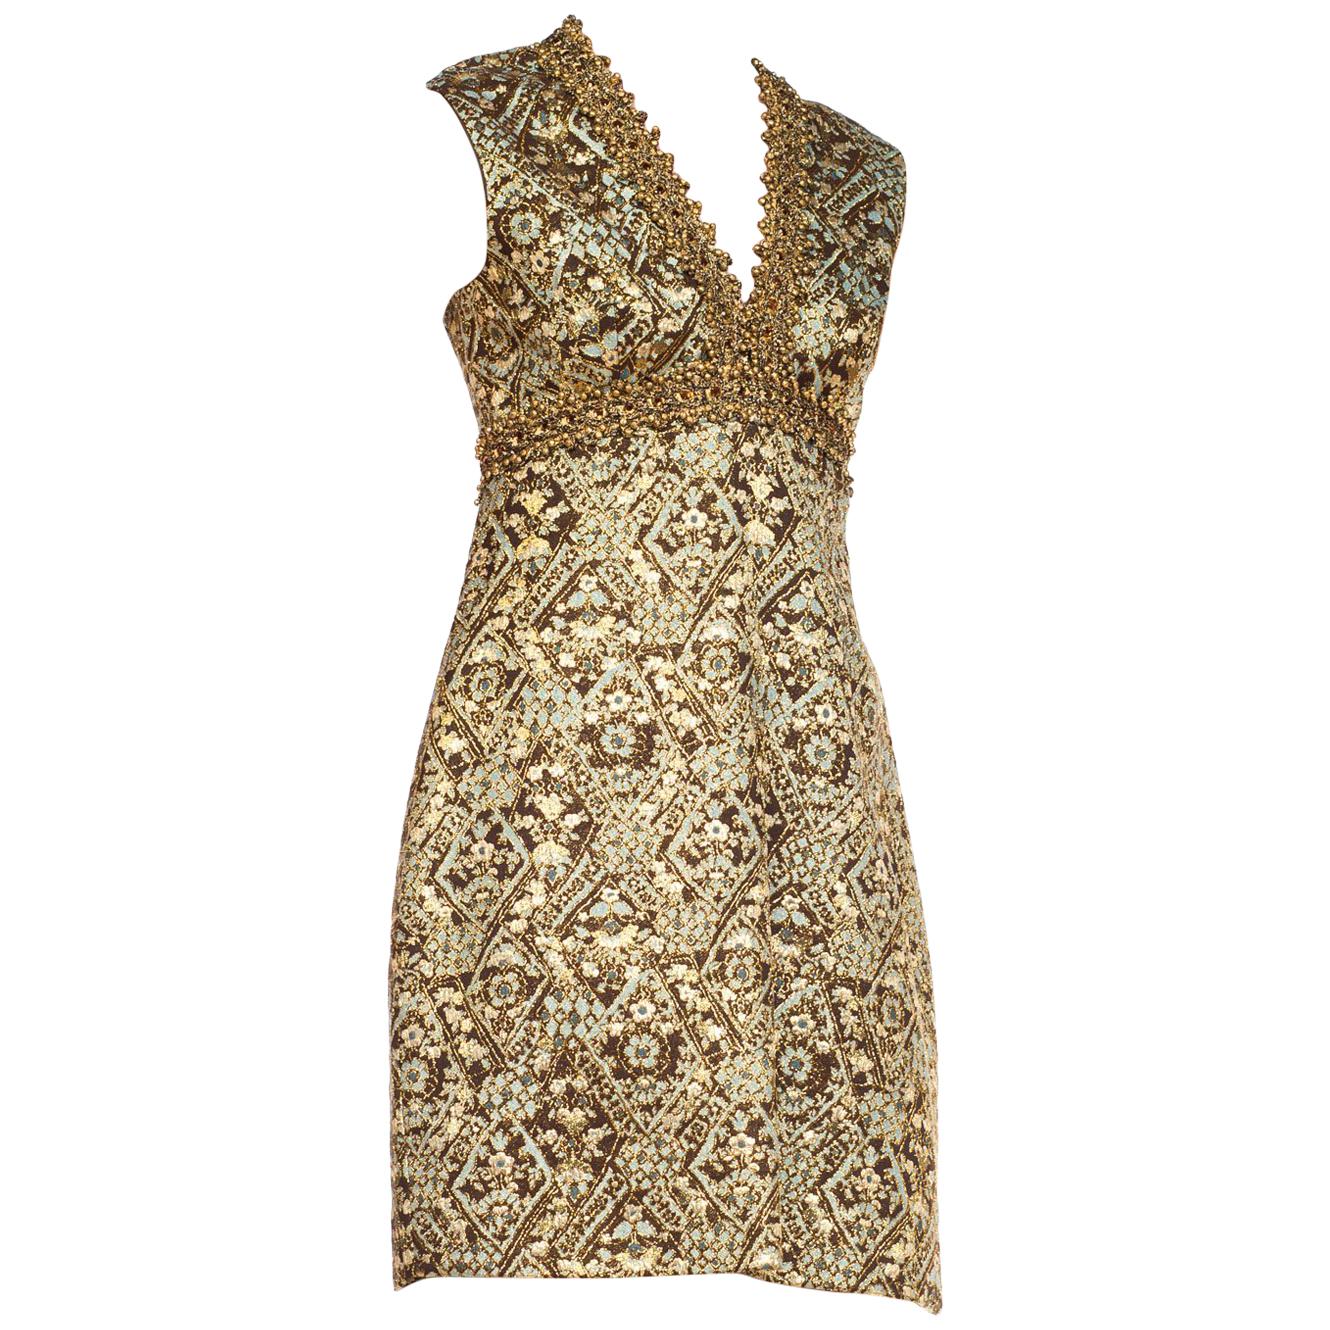 1960s Mod Oscar de La Renta Metallic Floral Cocktail Dress With Gold Braid 